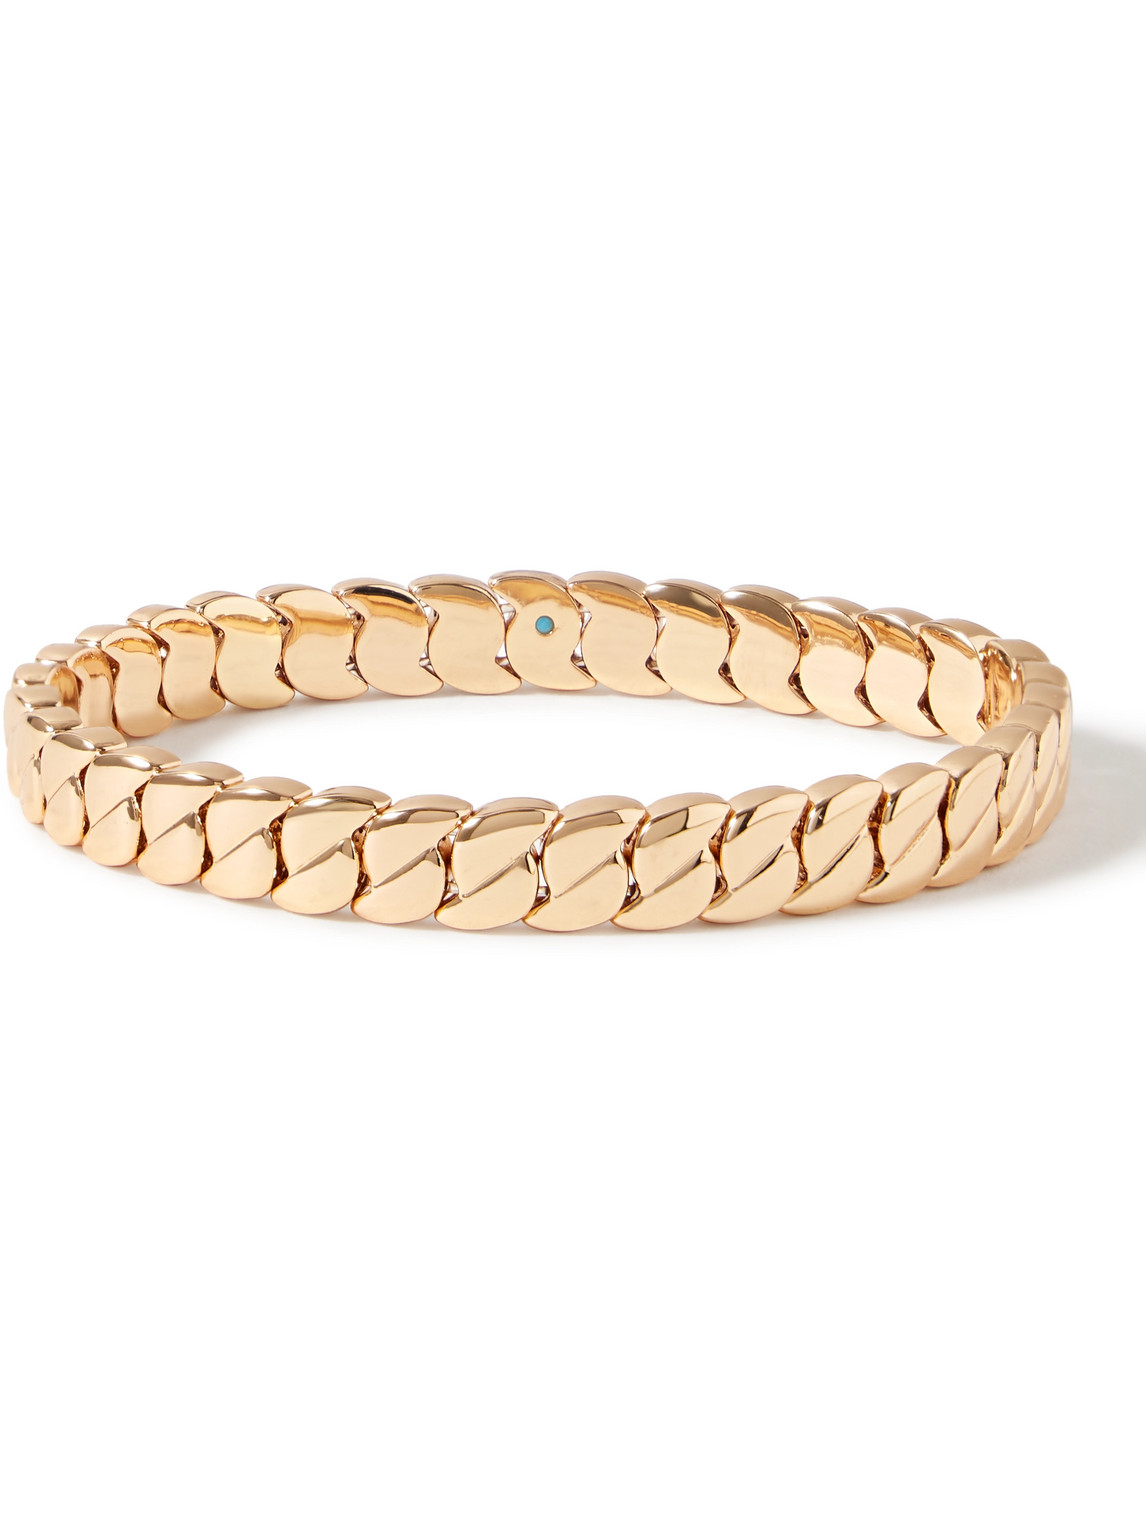 Roxanne Assoulin Curbed Gold-tone Bracelet